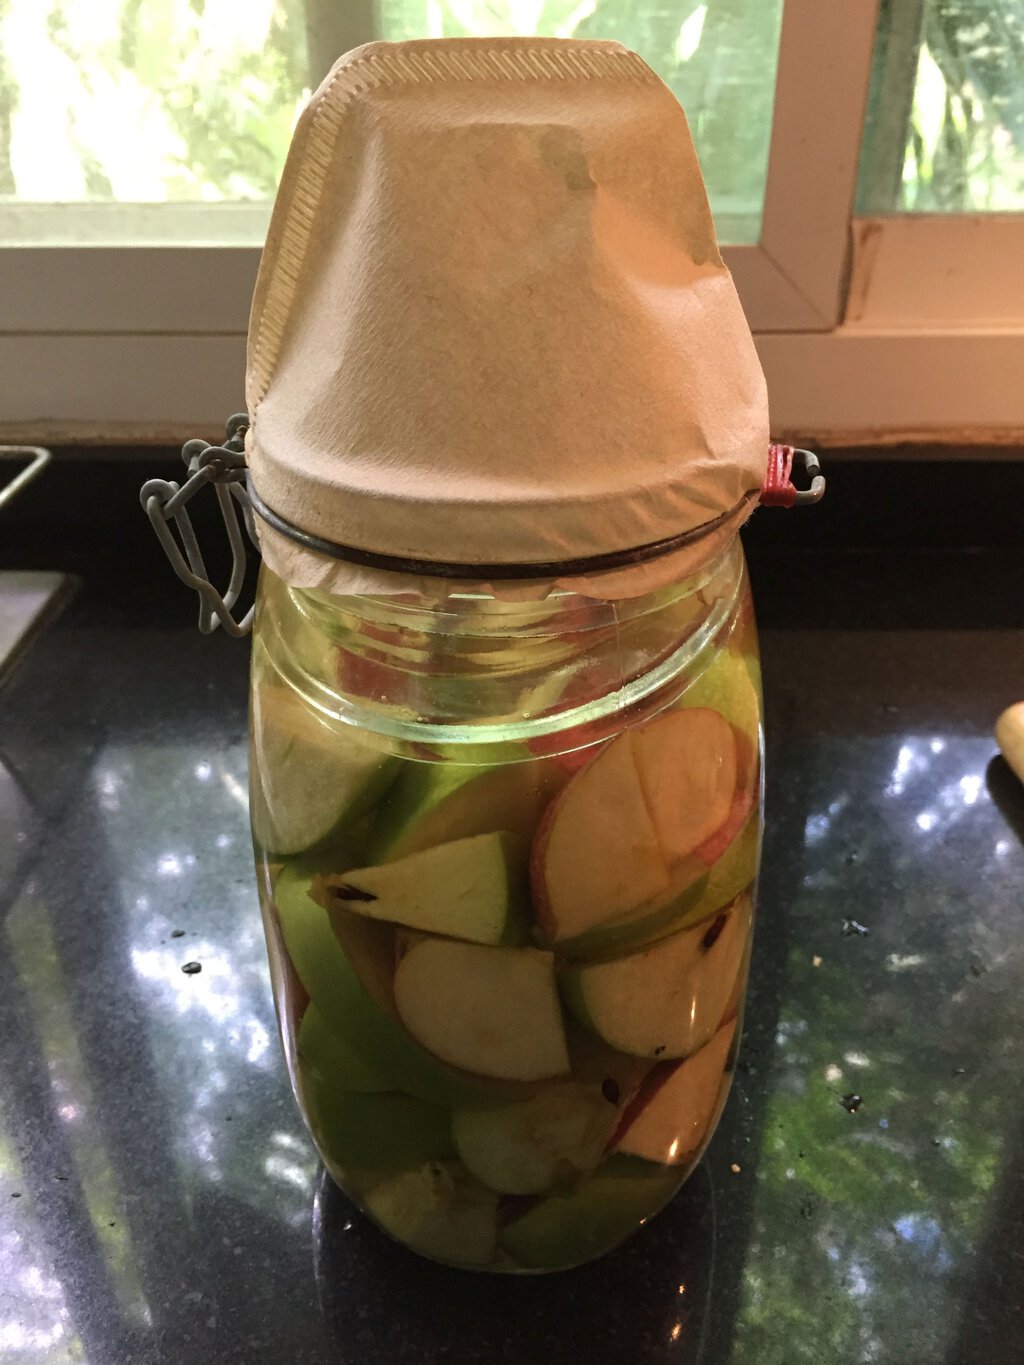 Chopped apples in fermentation jar with sugar solution